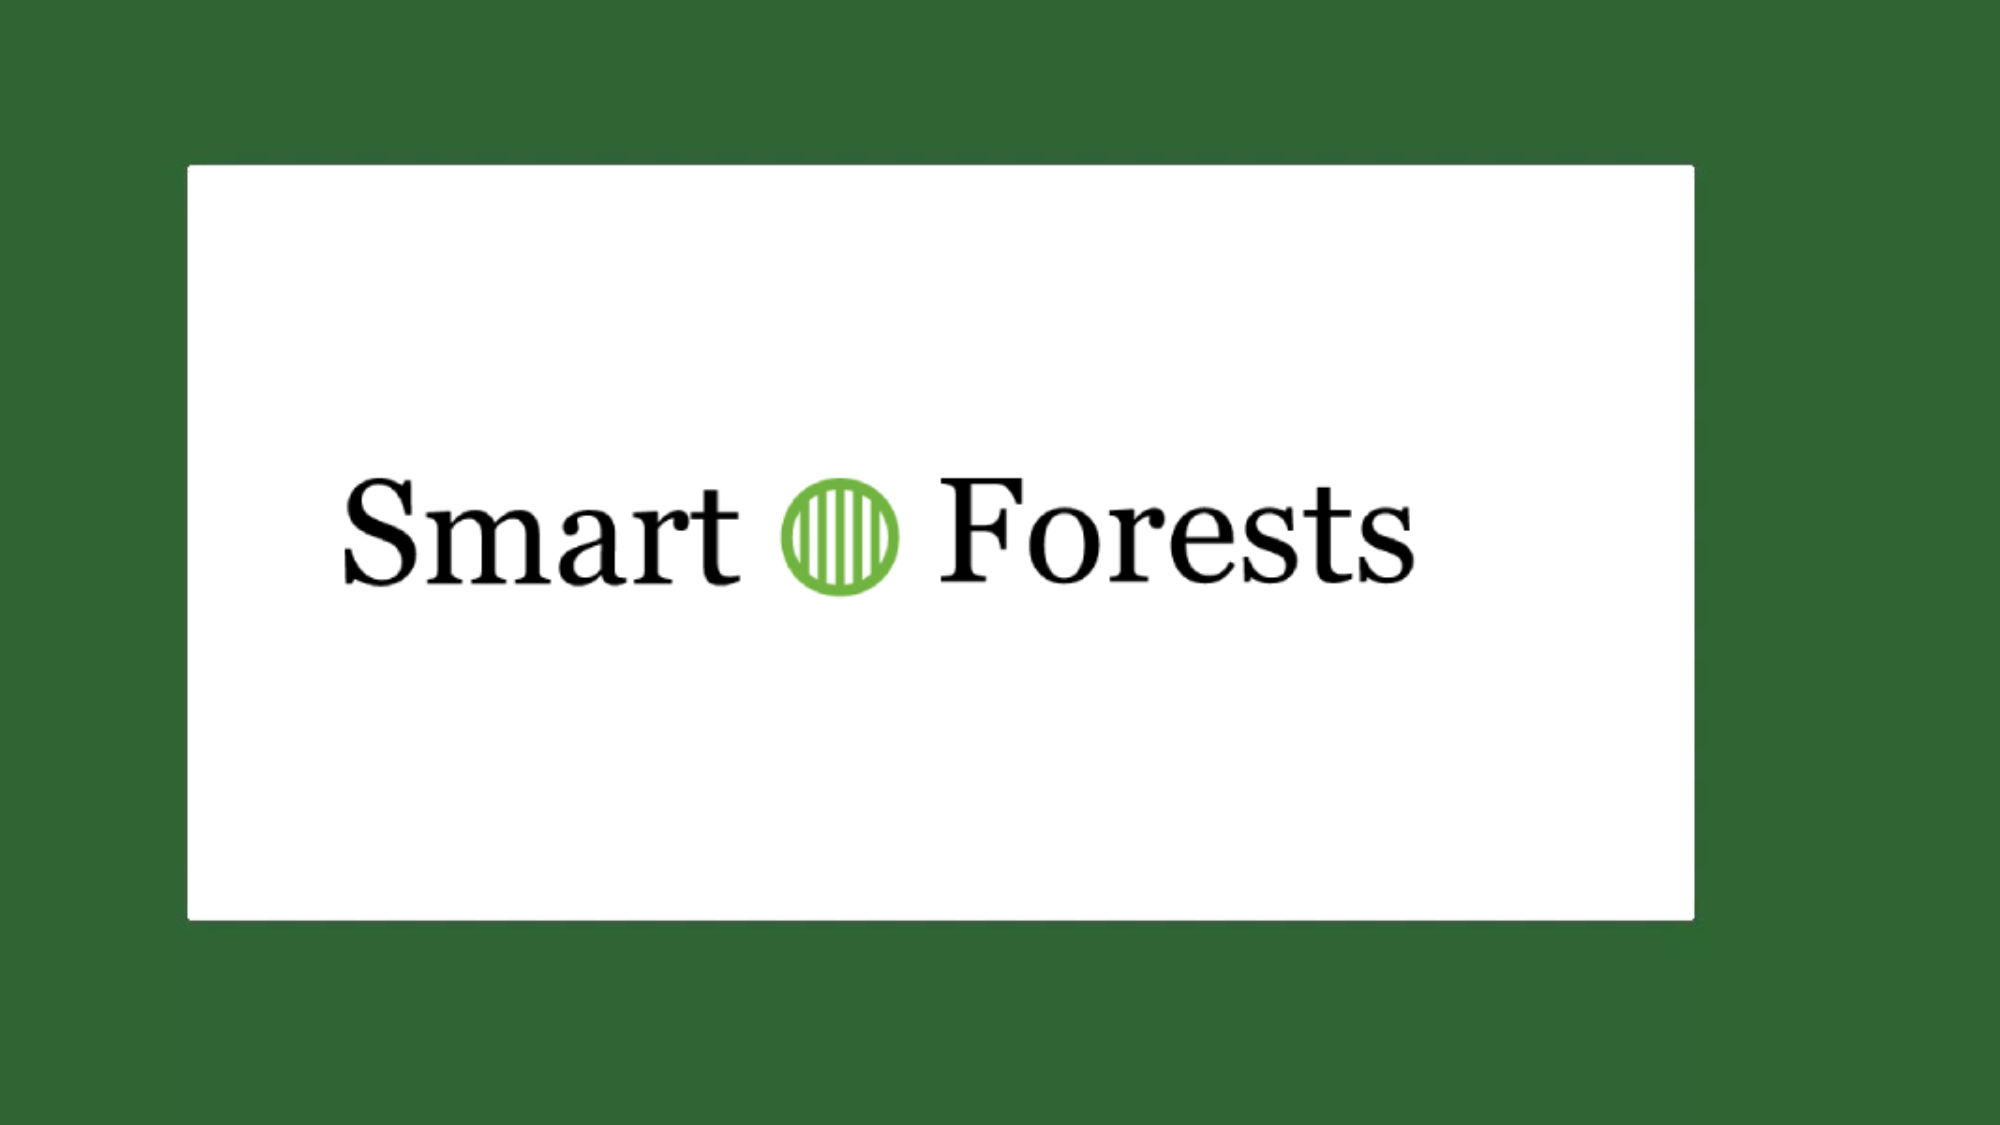 iplantforest news noticias midia forestbot mahogany roraima